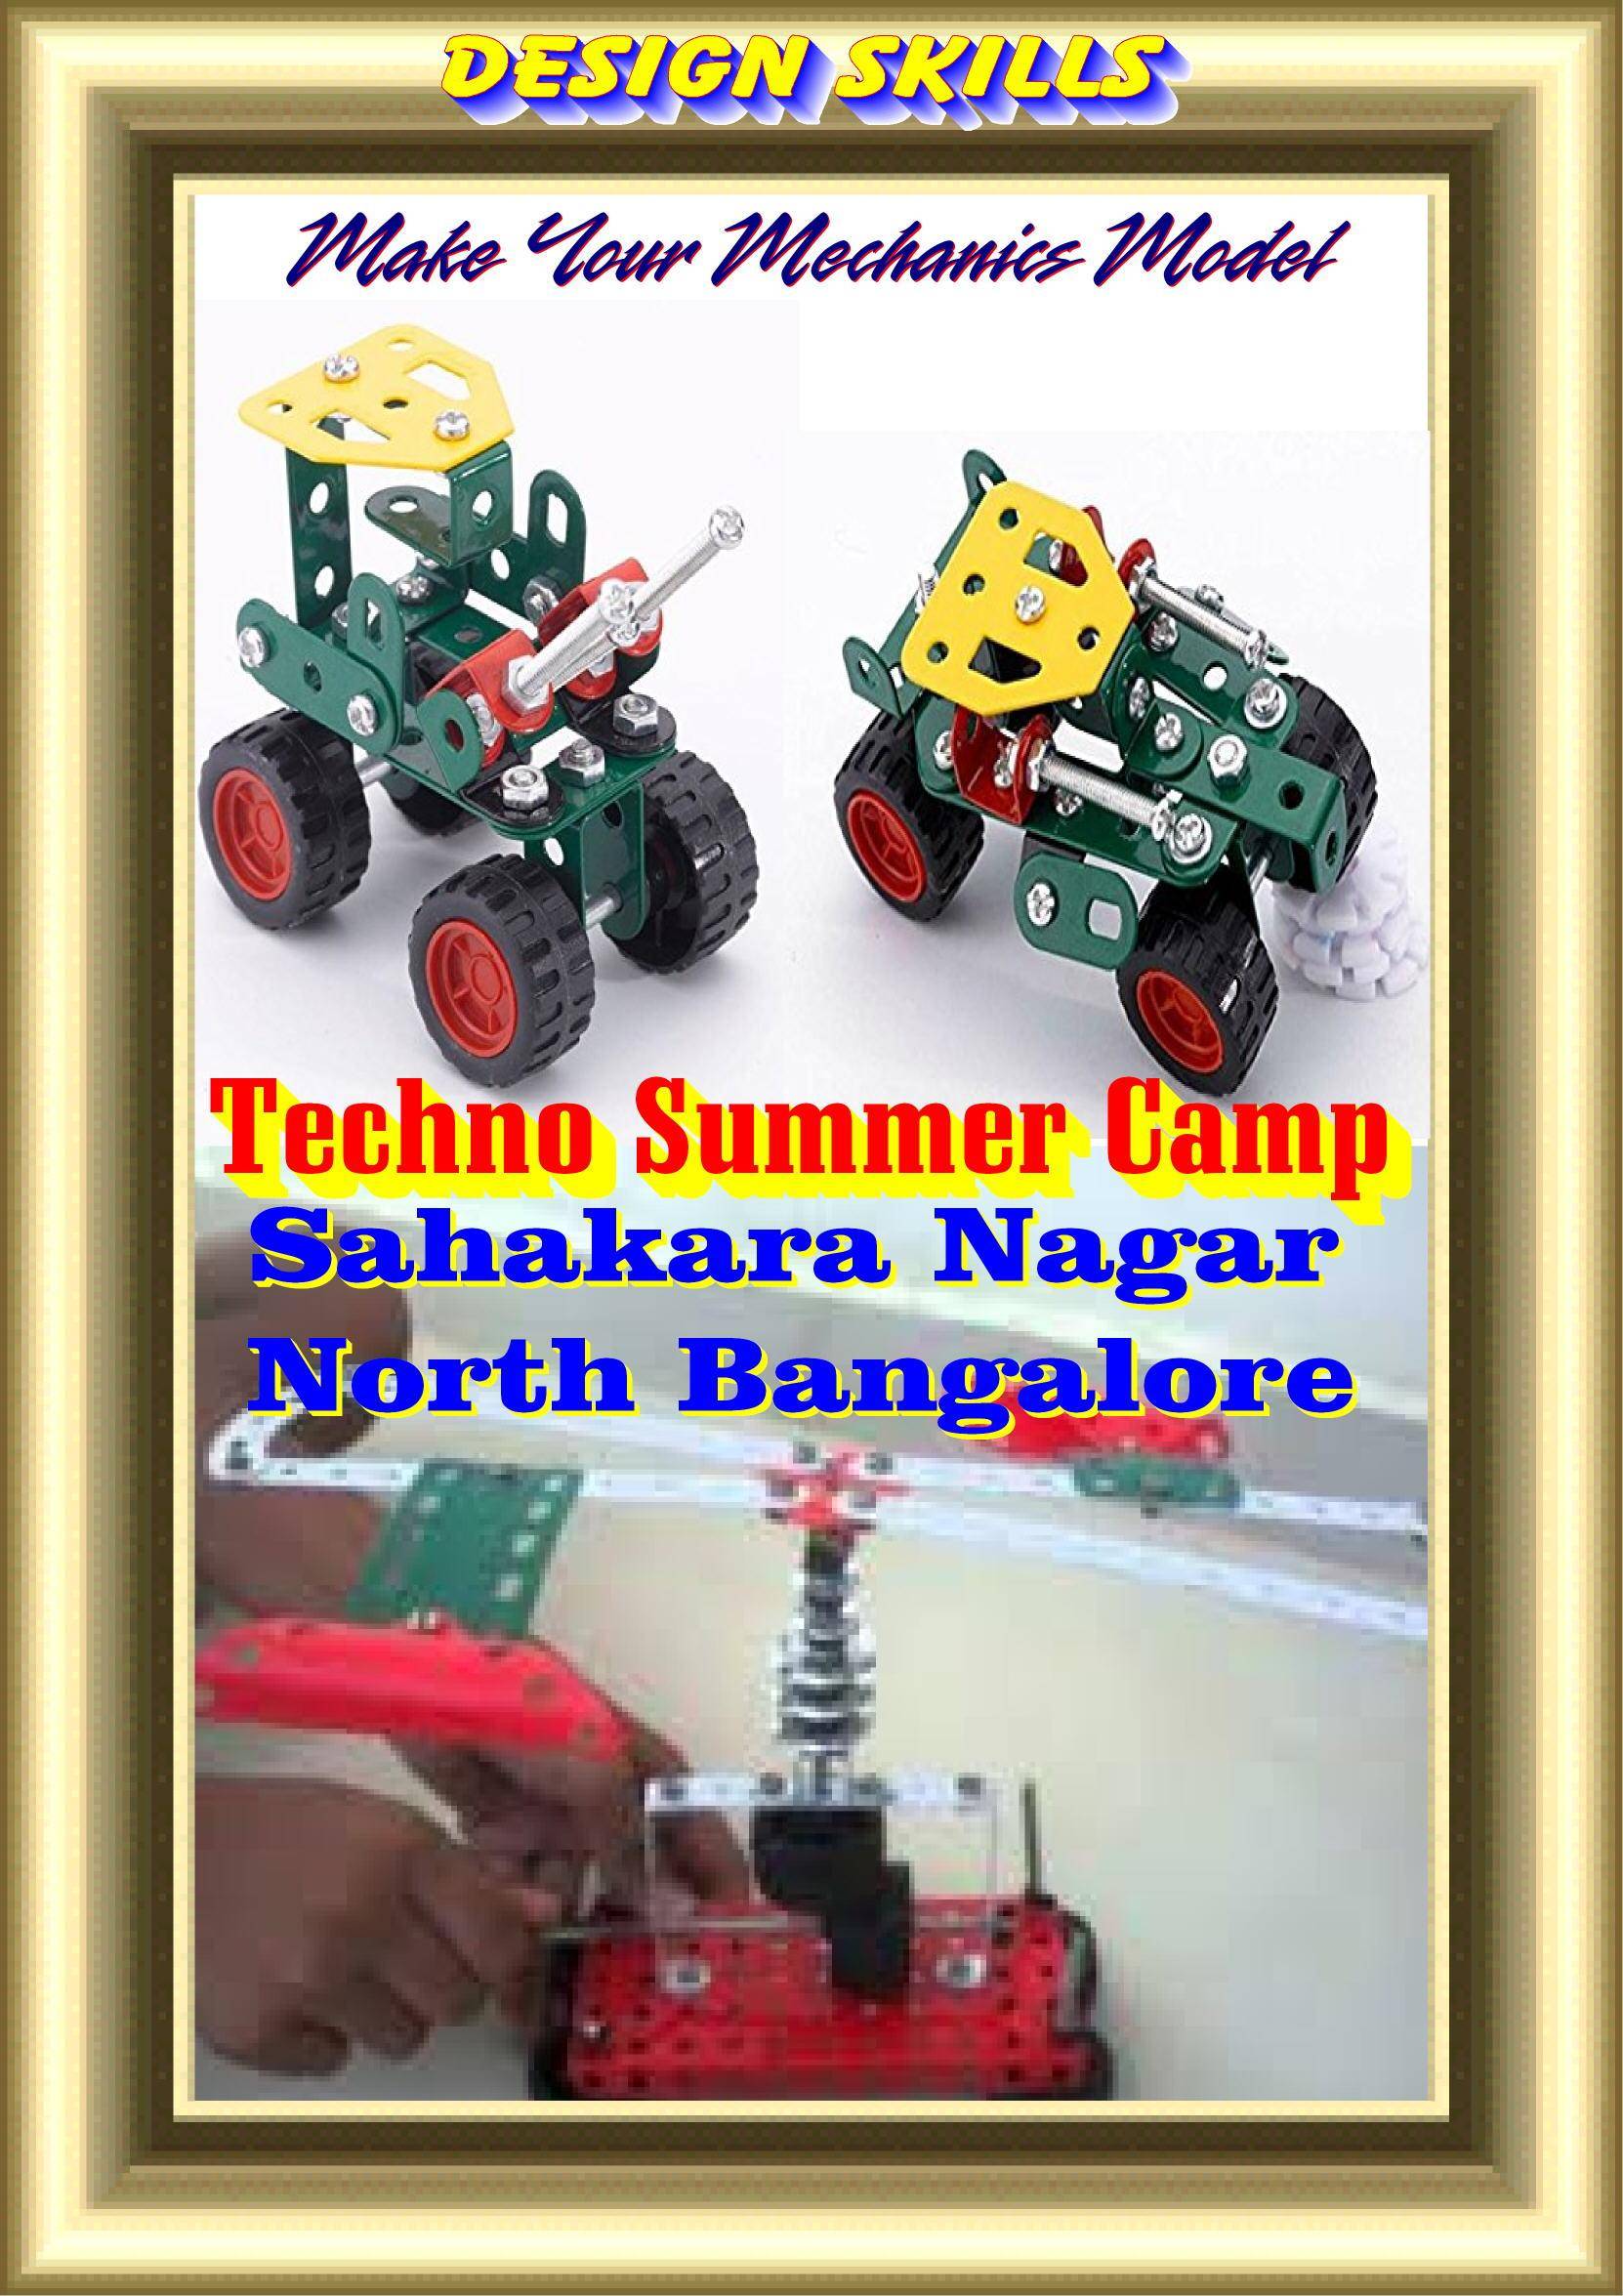 Make your own Mechanix Model - Techno Summer Camp